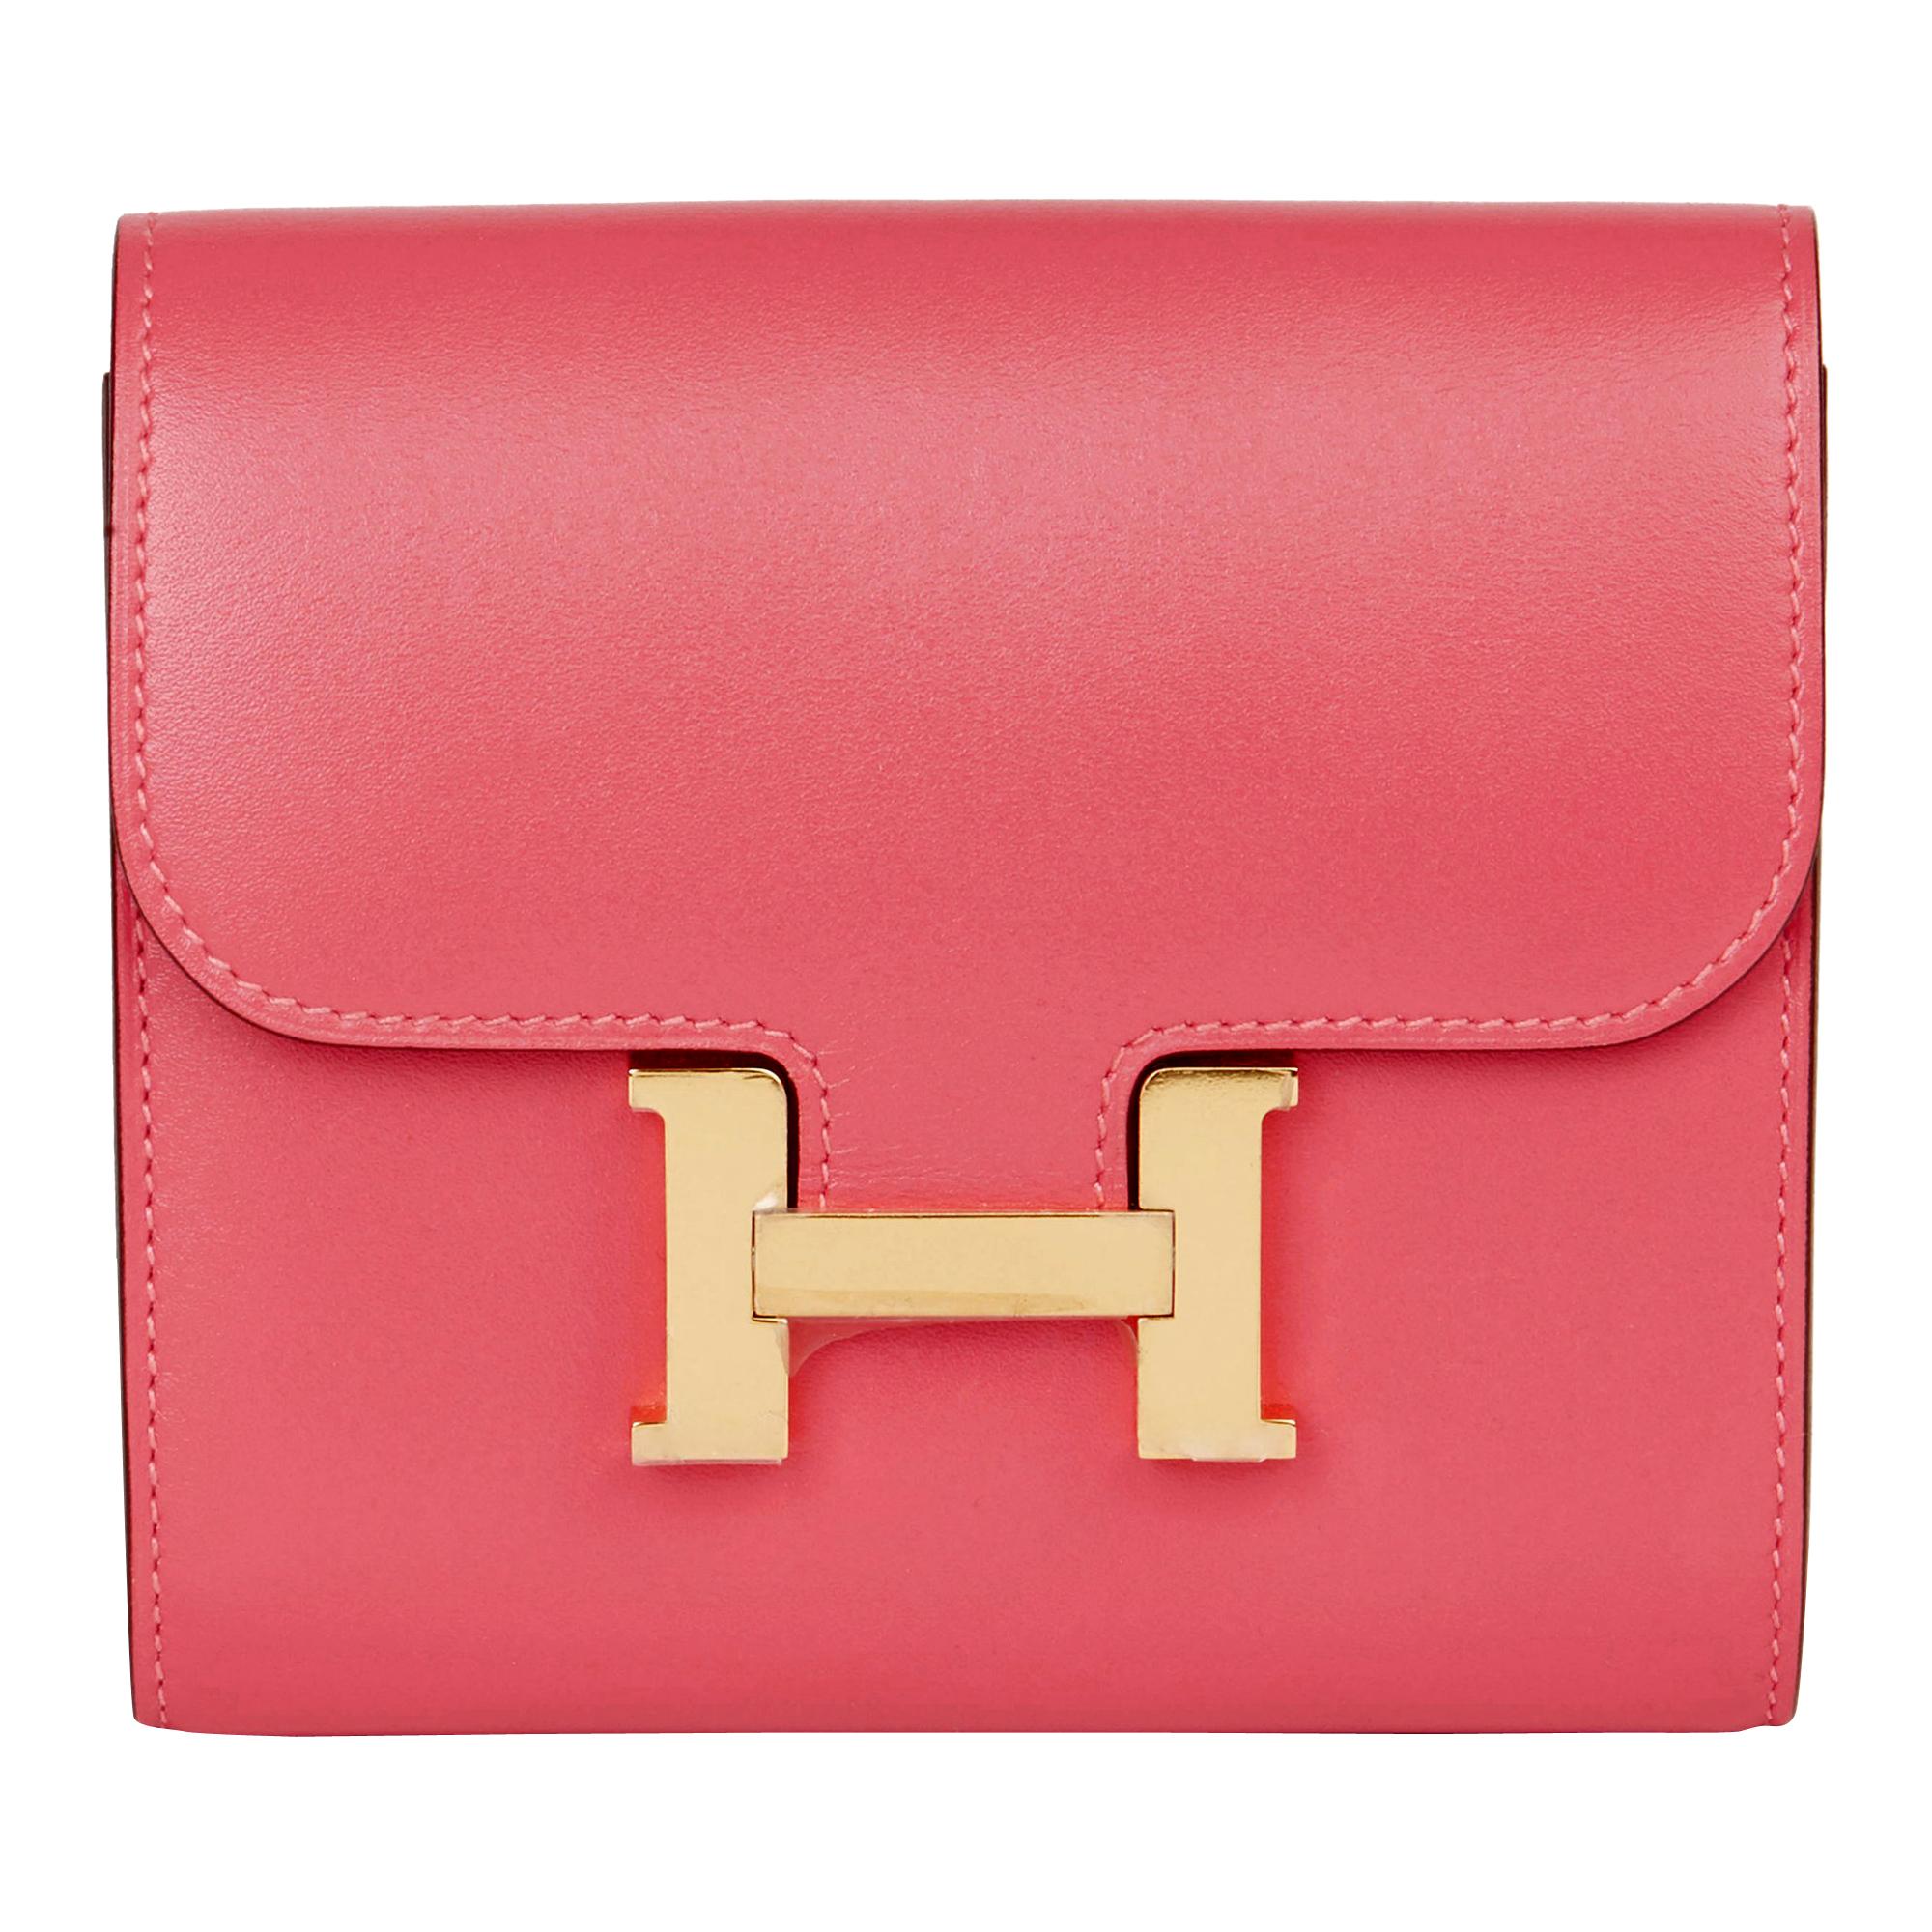 2017 Hermès Rose Lipstick Tadelakt Leather Constance Compact Wallet